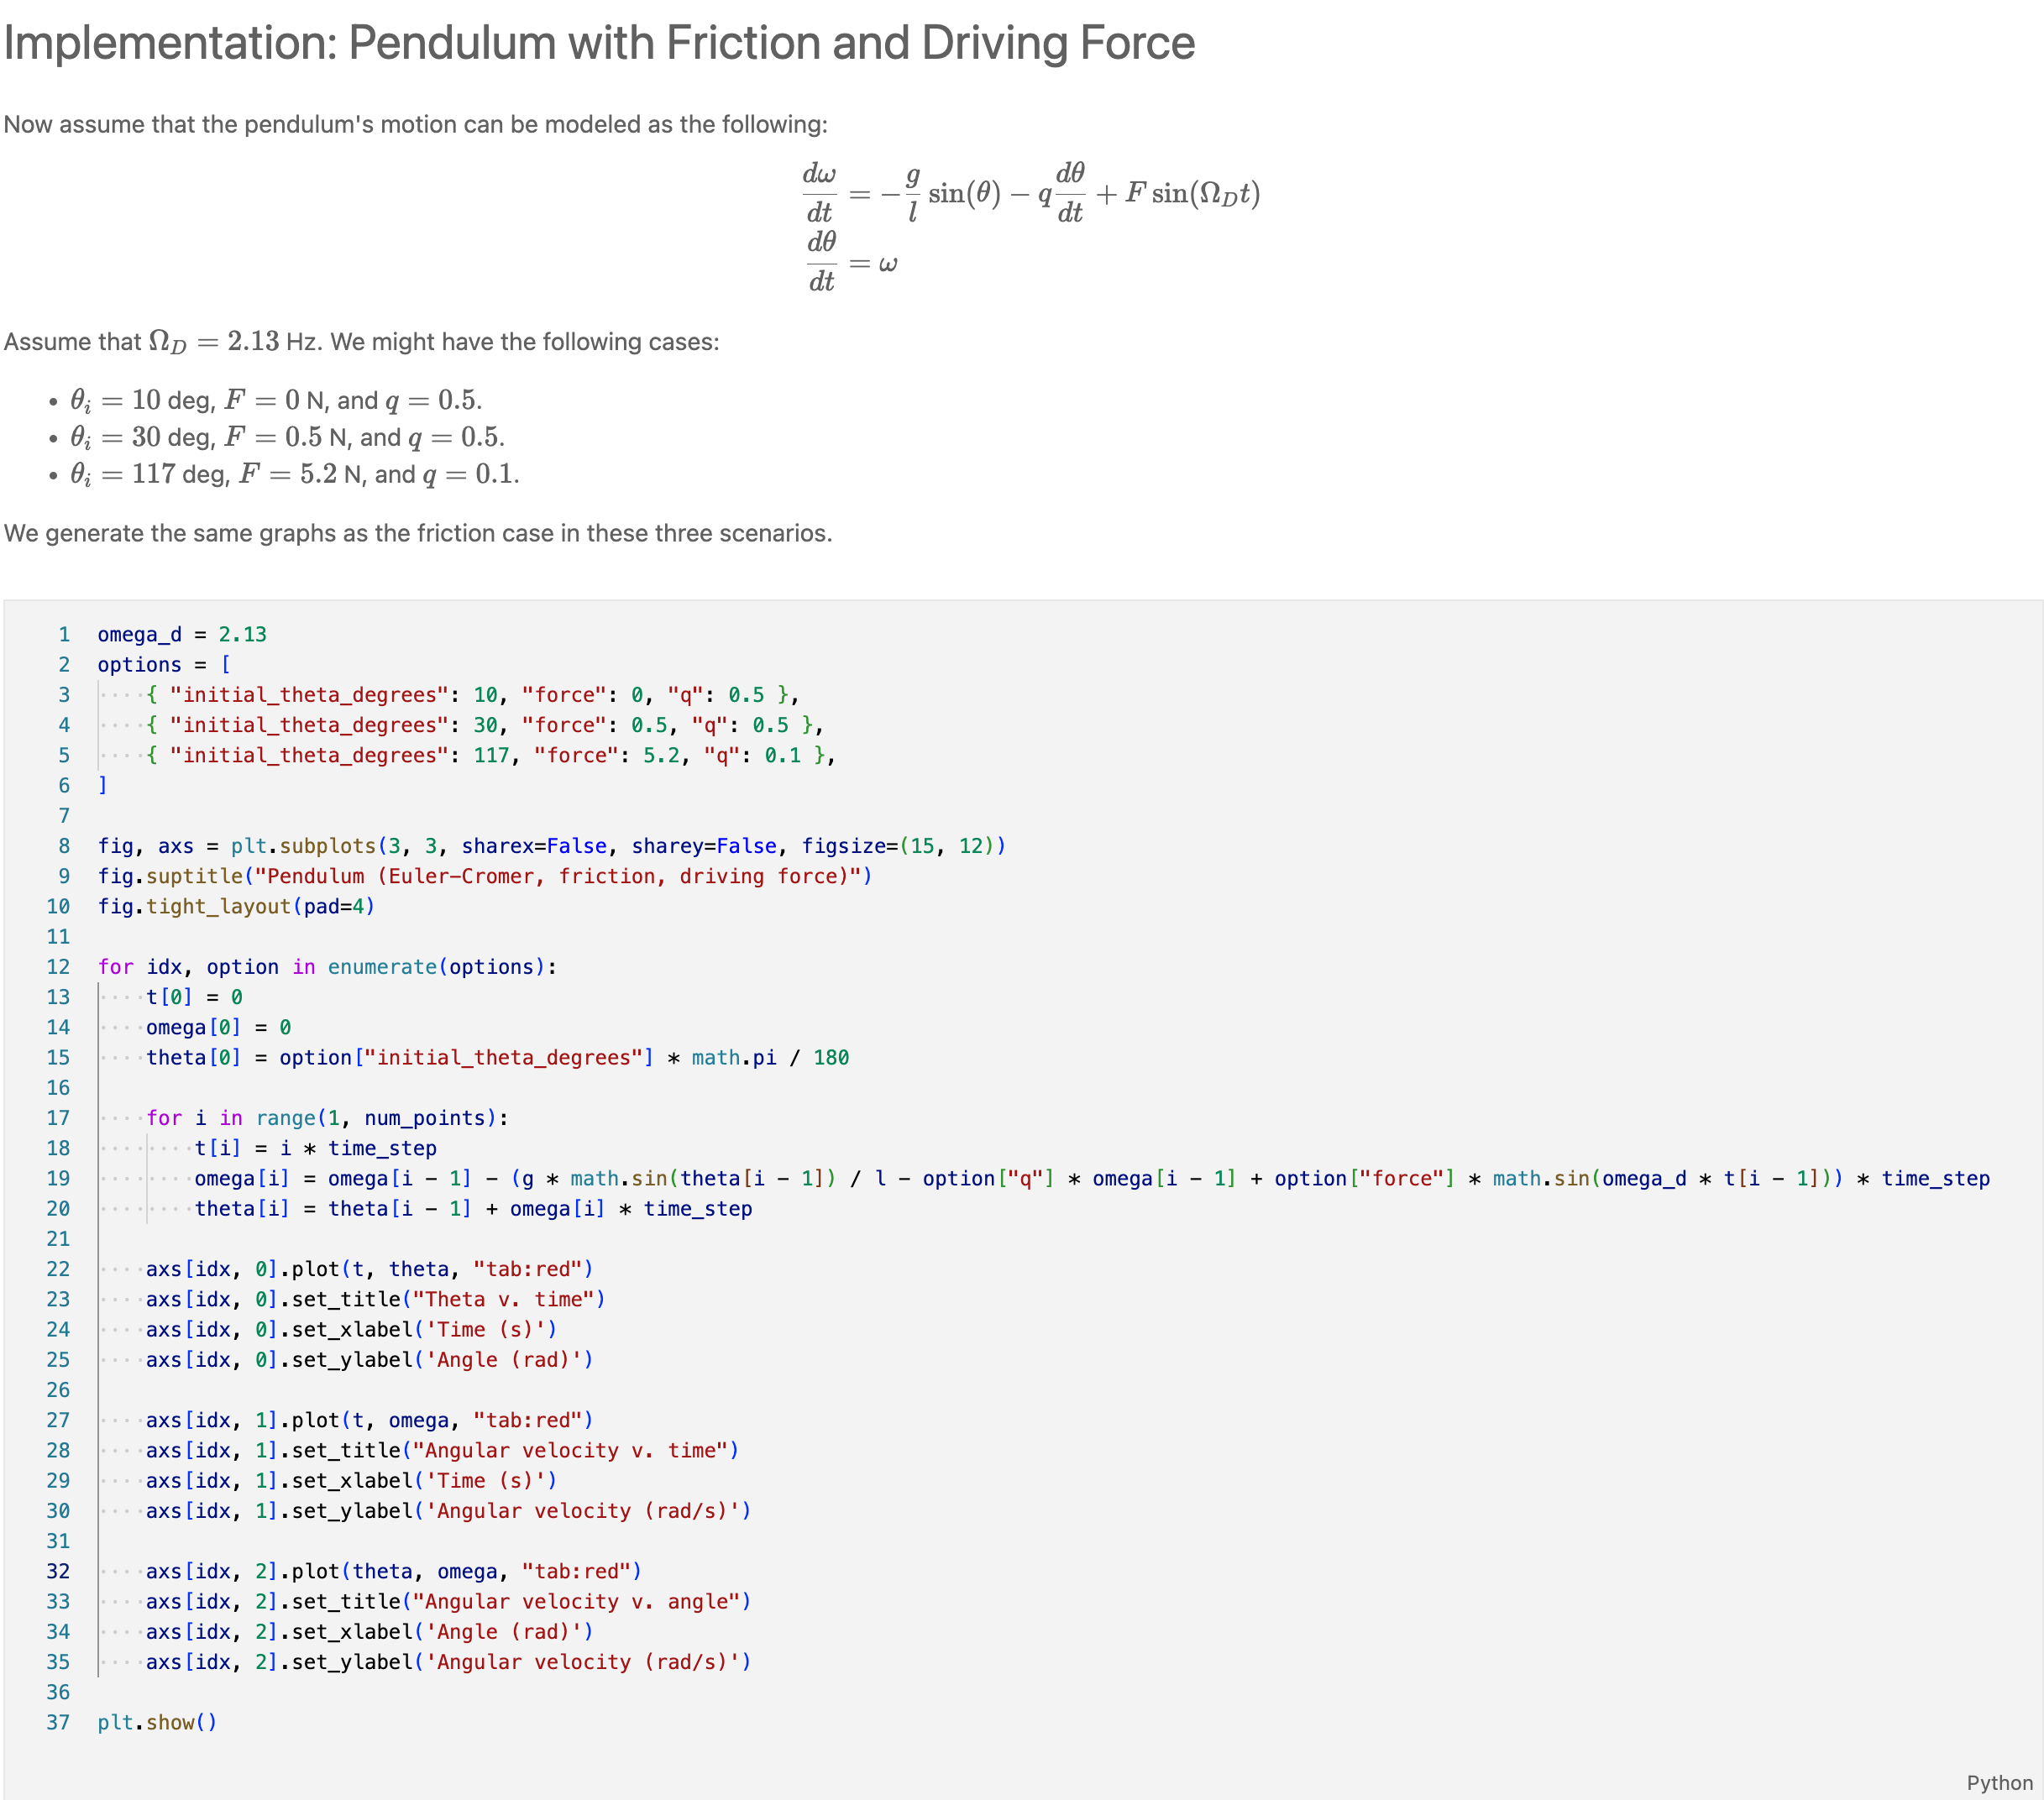 Screenshot of Jupyter notebook with LaTeX formulas and Python code